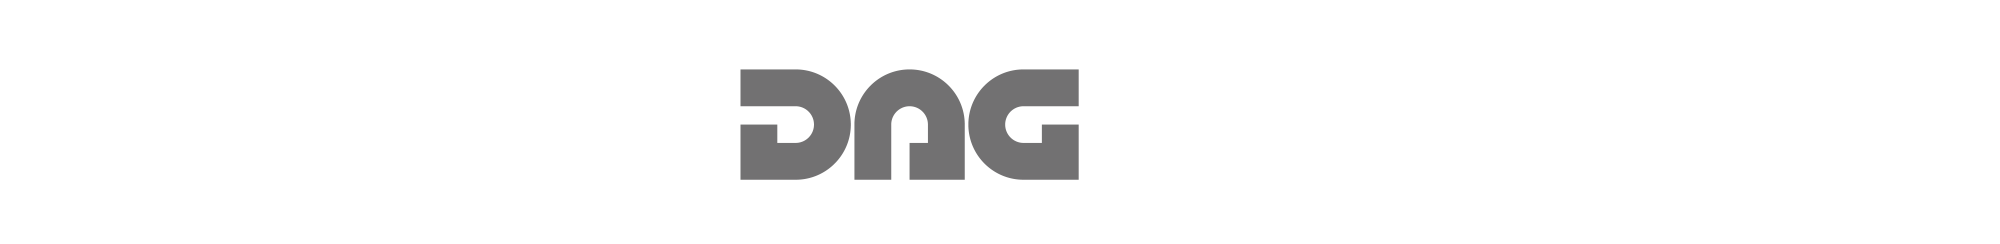 DAG研のロゴ